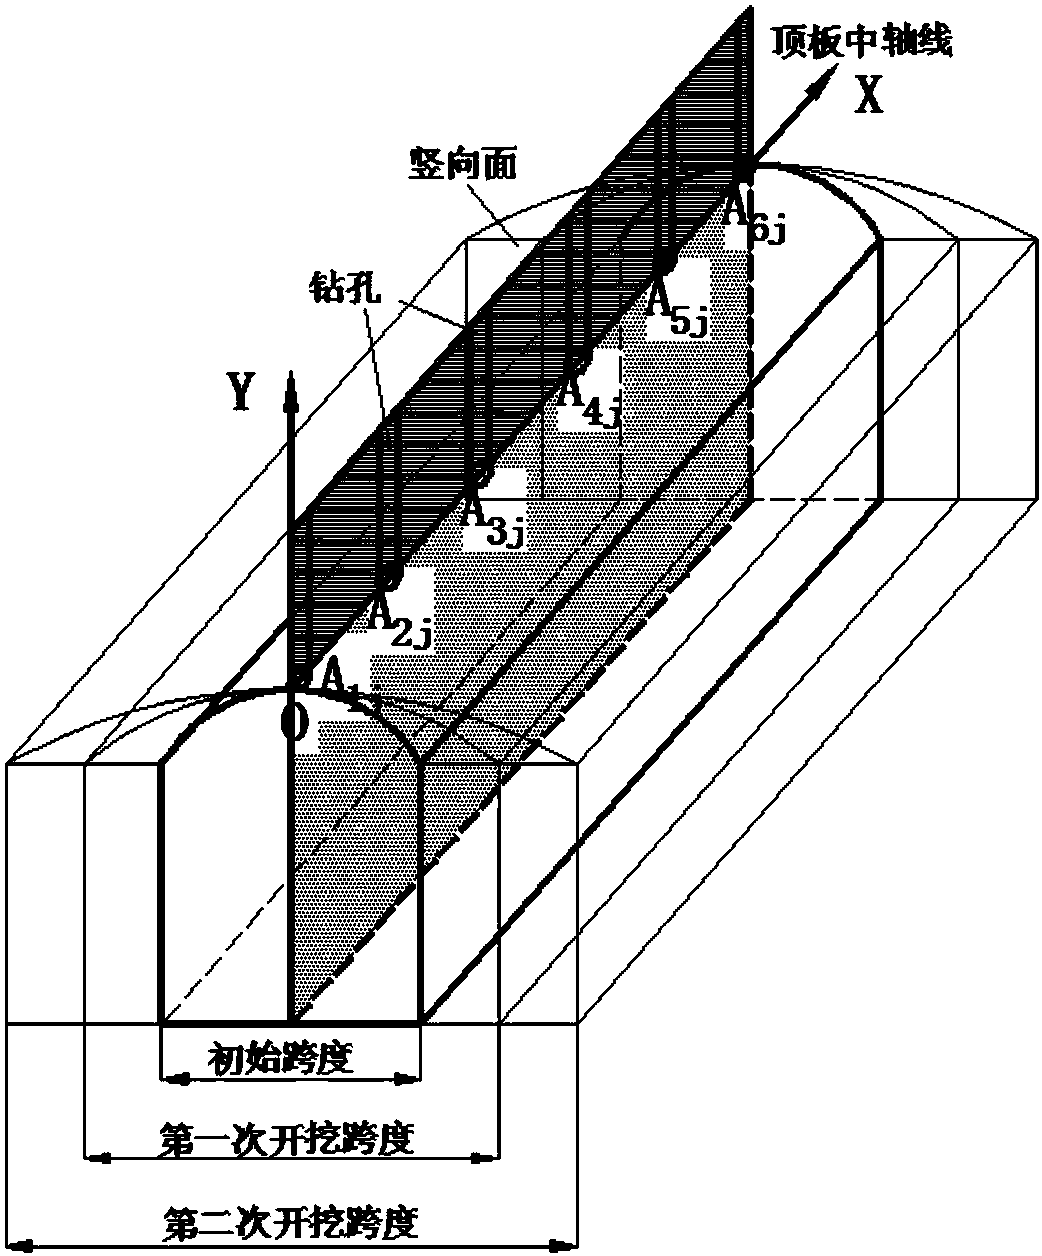 Dynamic elastic modulus detection method of large-span underground cavity mining roof stability